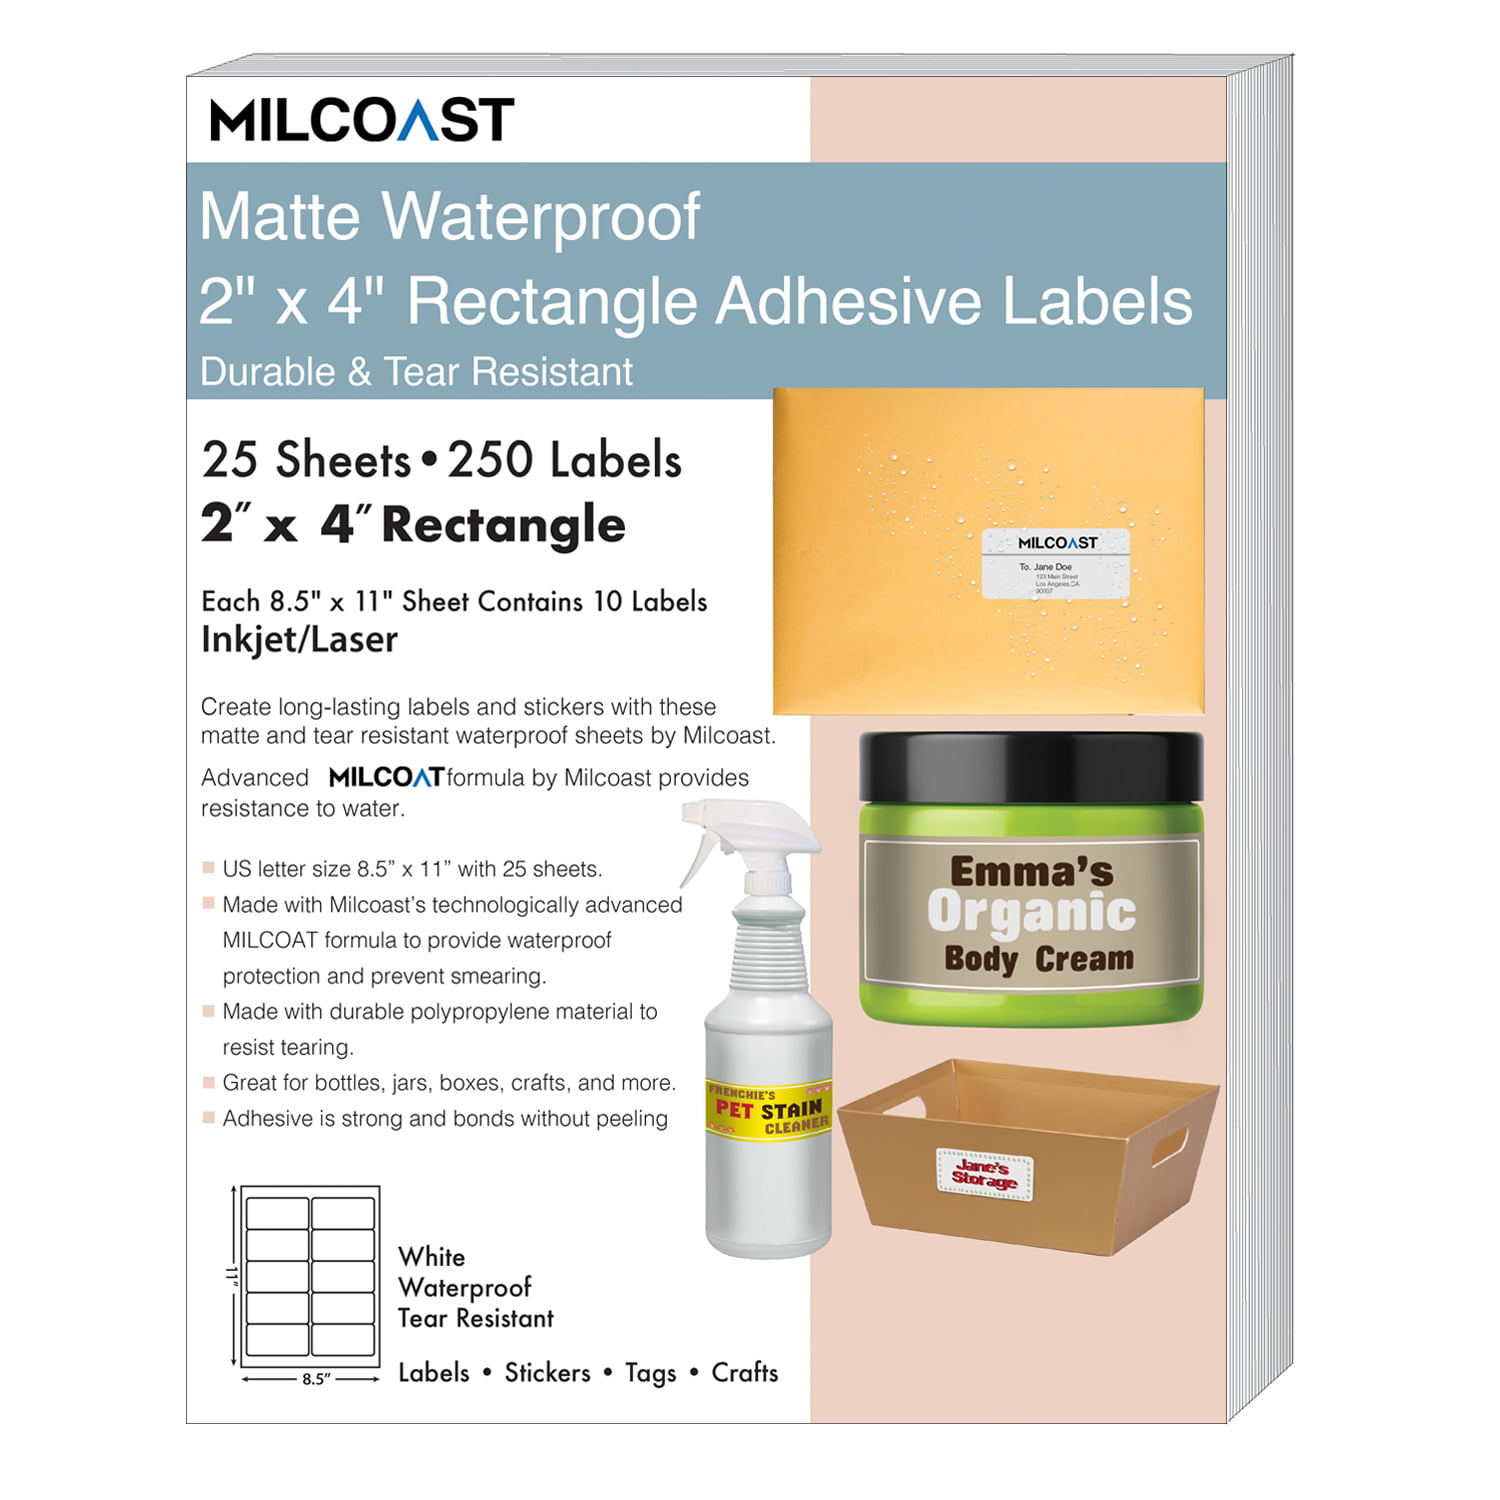 25 Sheets 250 Labels Milcoast Matte Waterproof 2 x 4" Rectangle Labels 